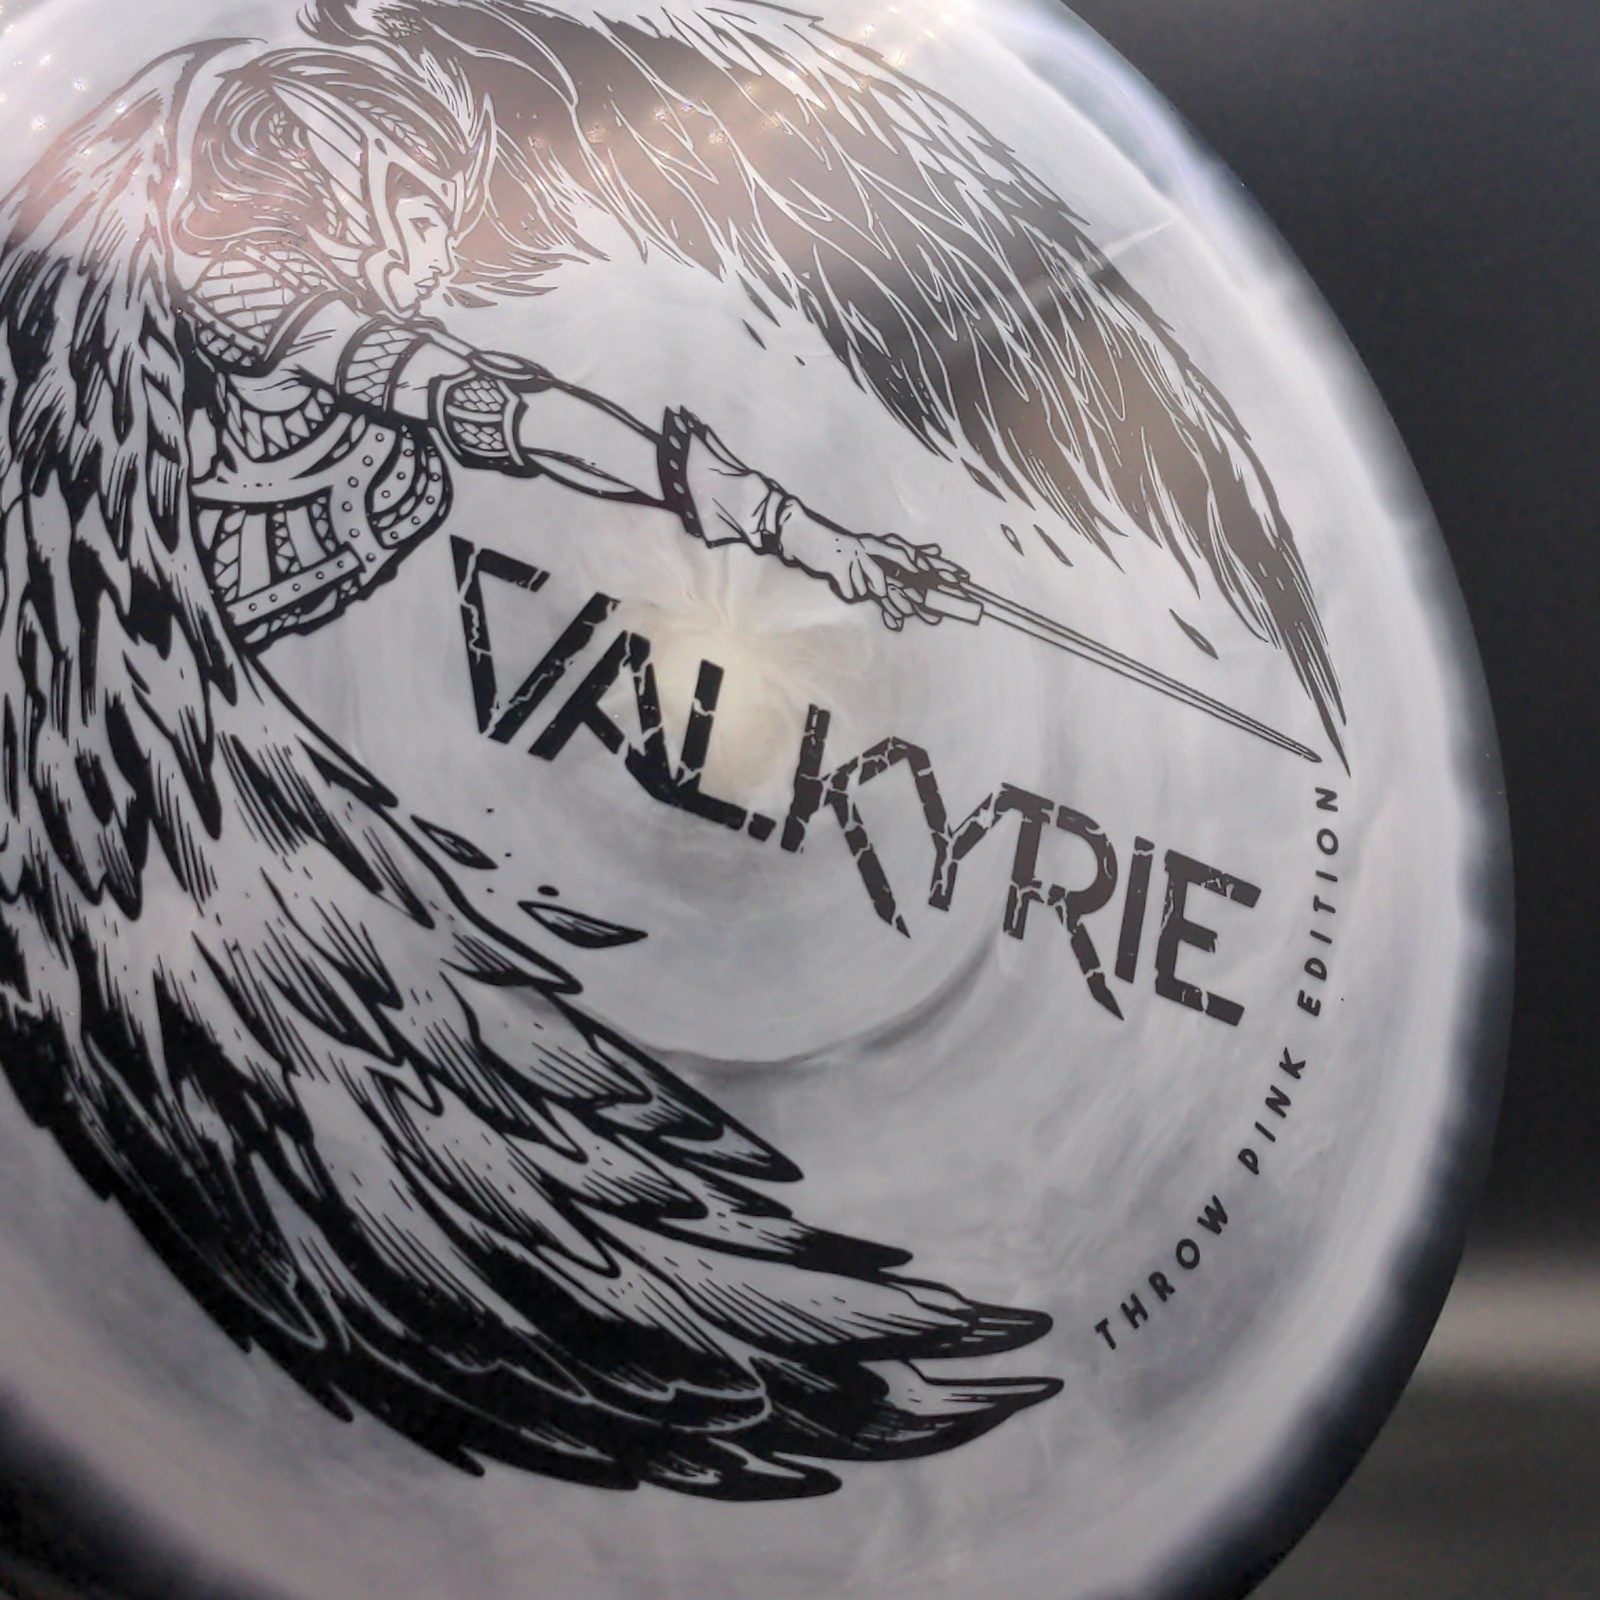 Halo Star Valkyrie - Throw Pink WDGC 2022 - XXL Stamp - 47/200 Innova